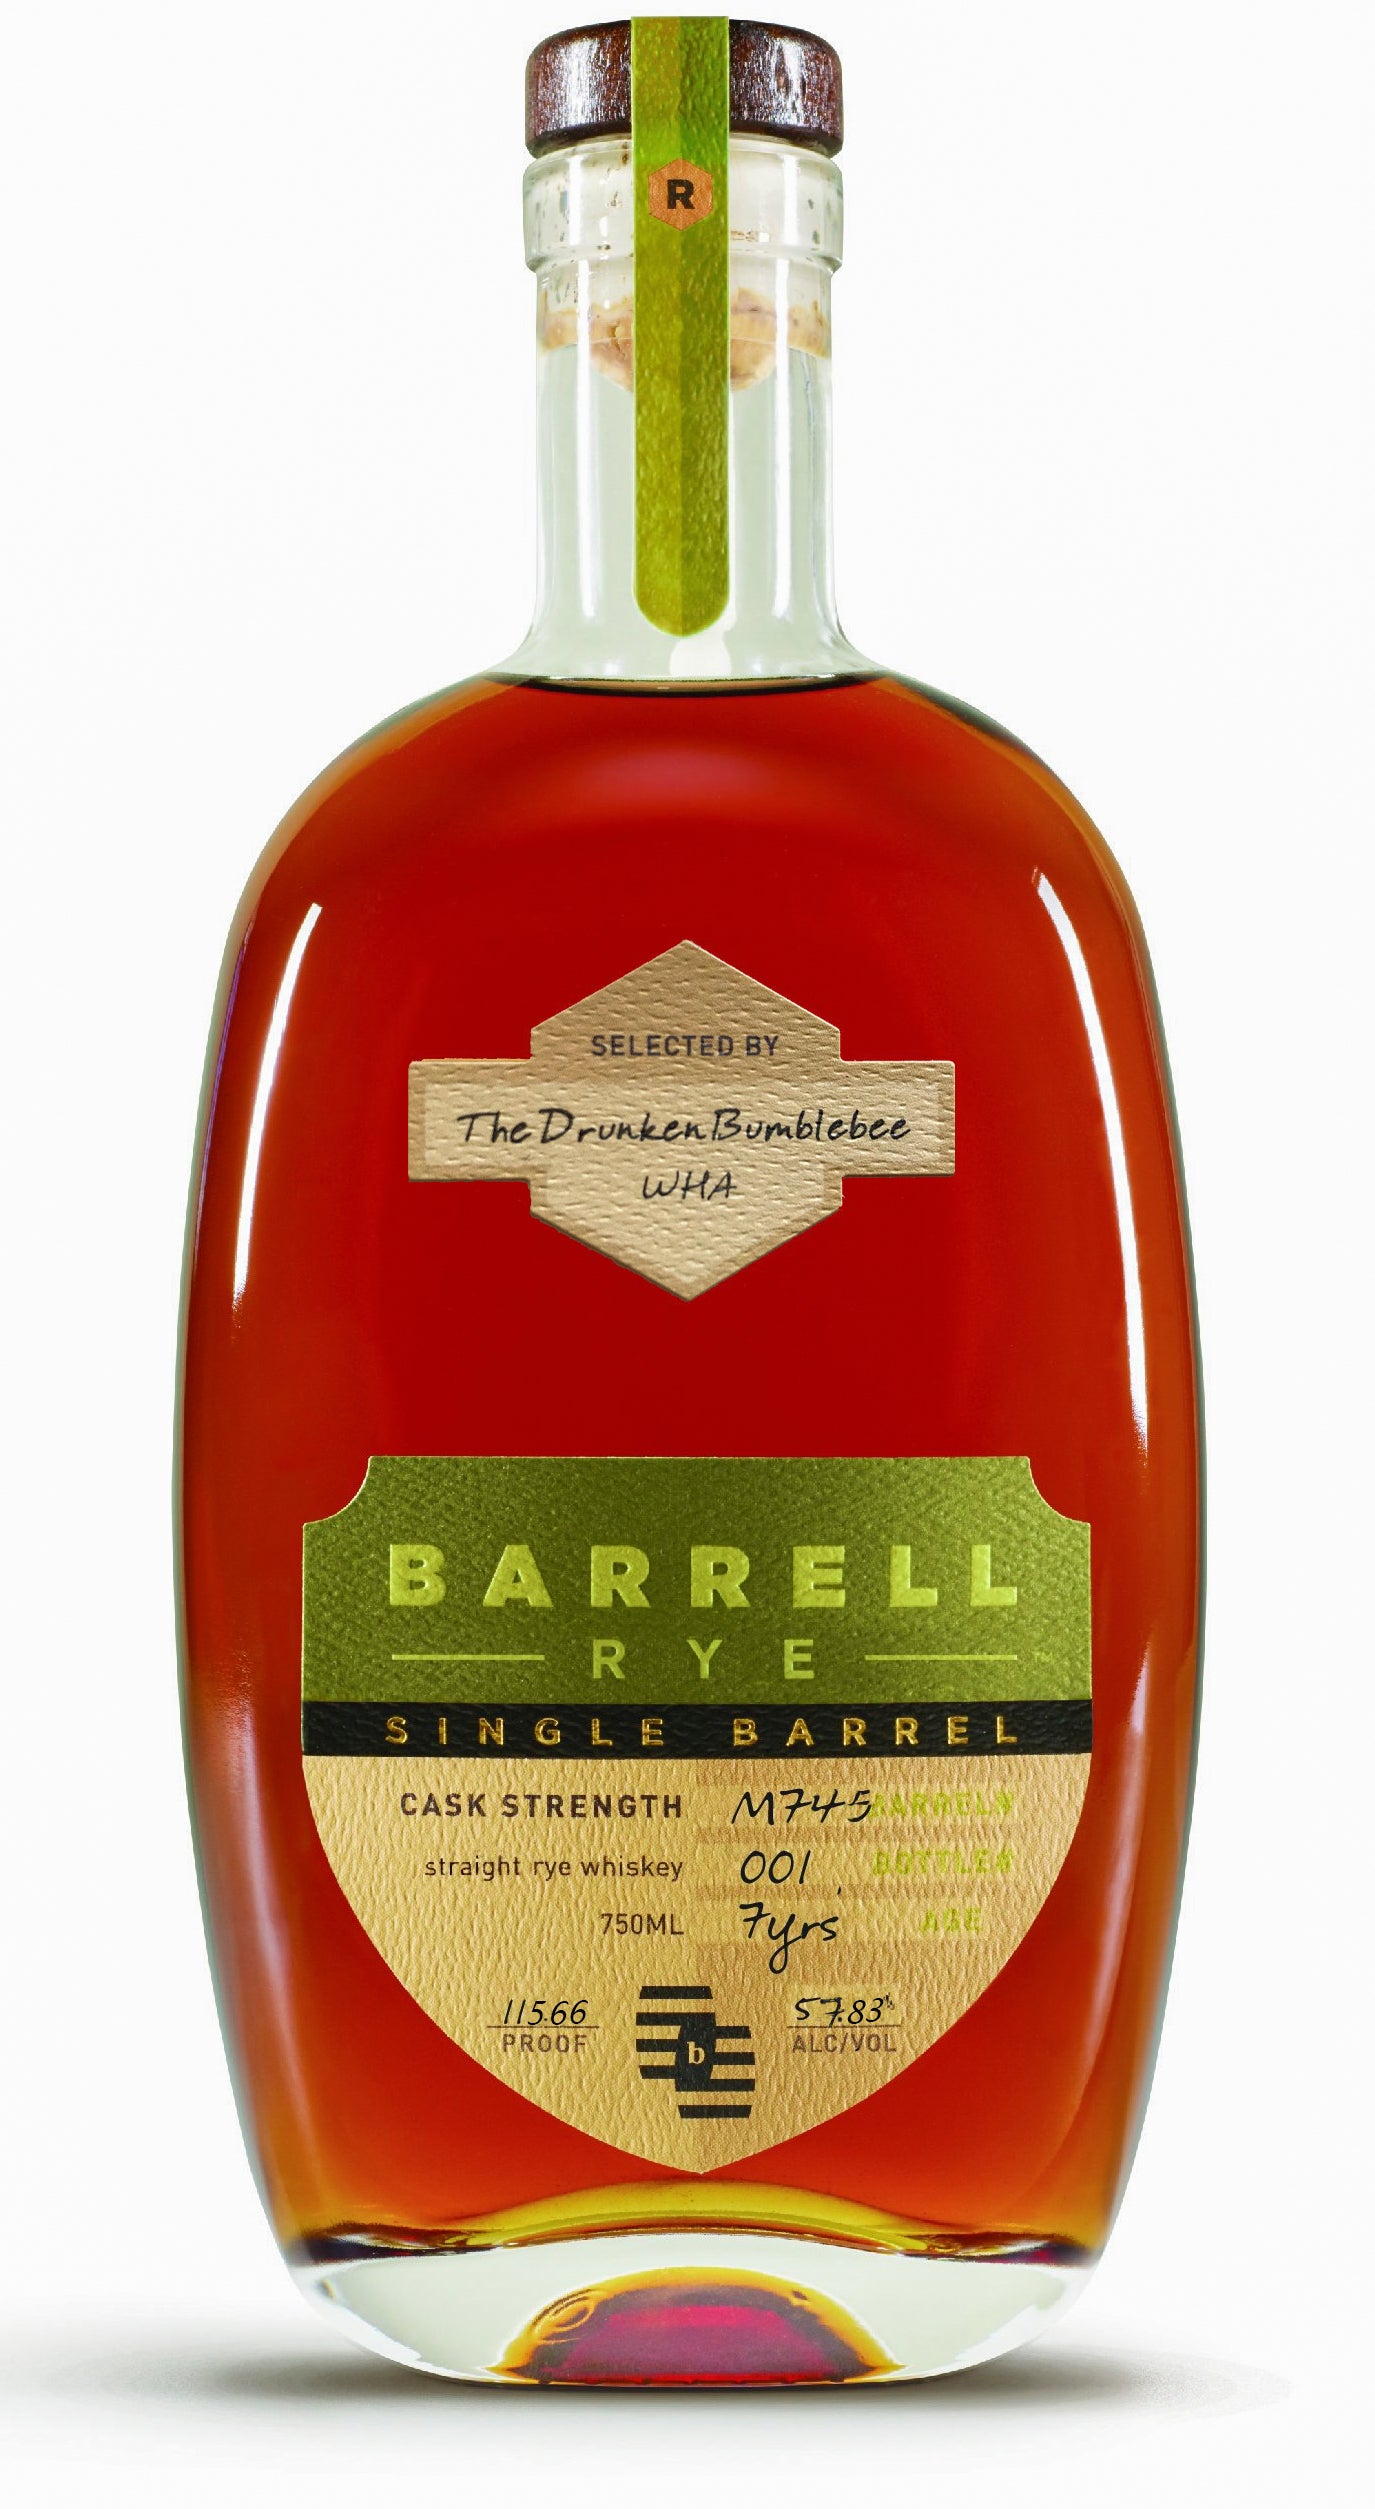 Barrell WHA "The Drunken Bumblebee" Single Barrel Rye Whiskey 750ml 57.83% abv.